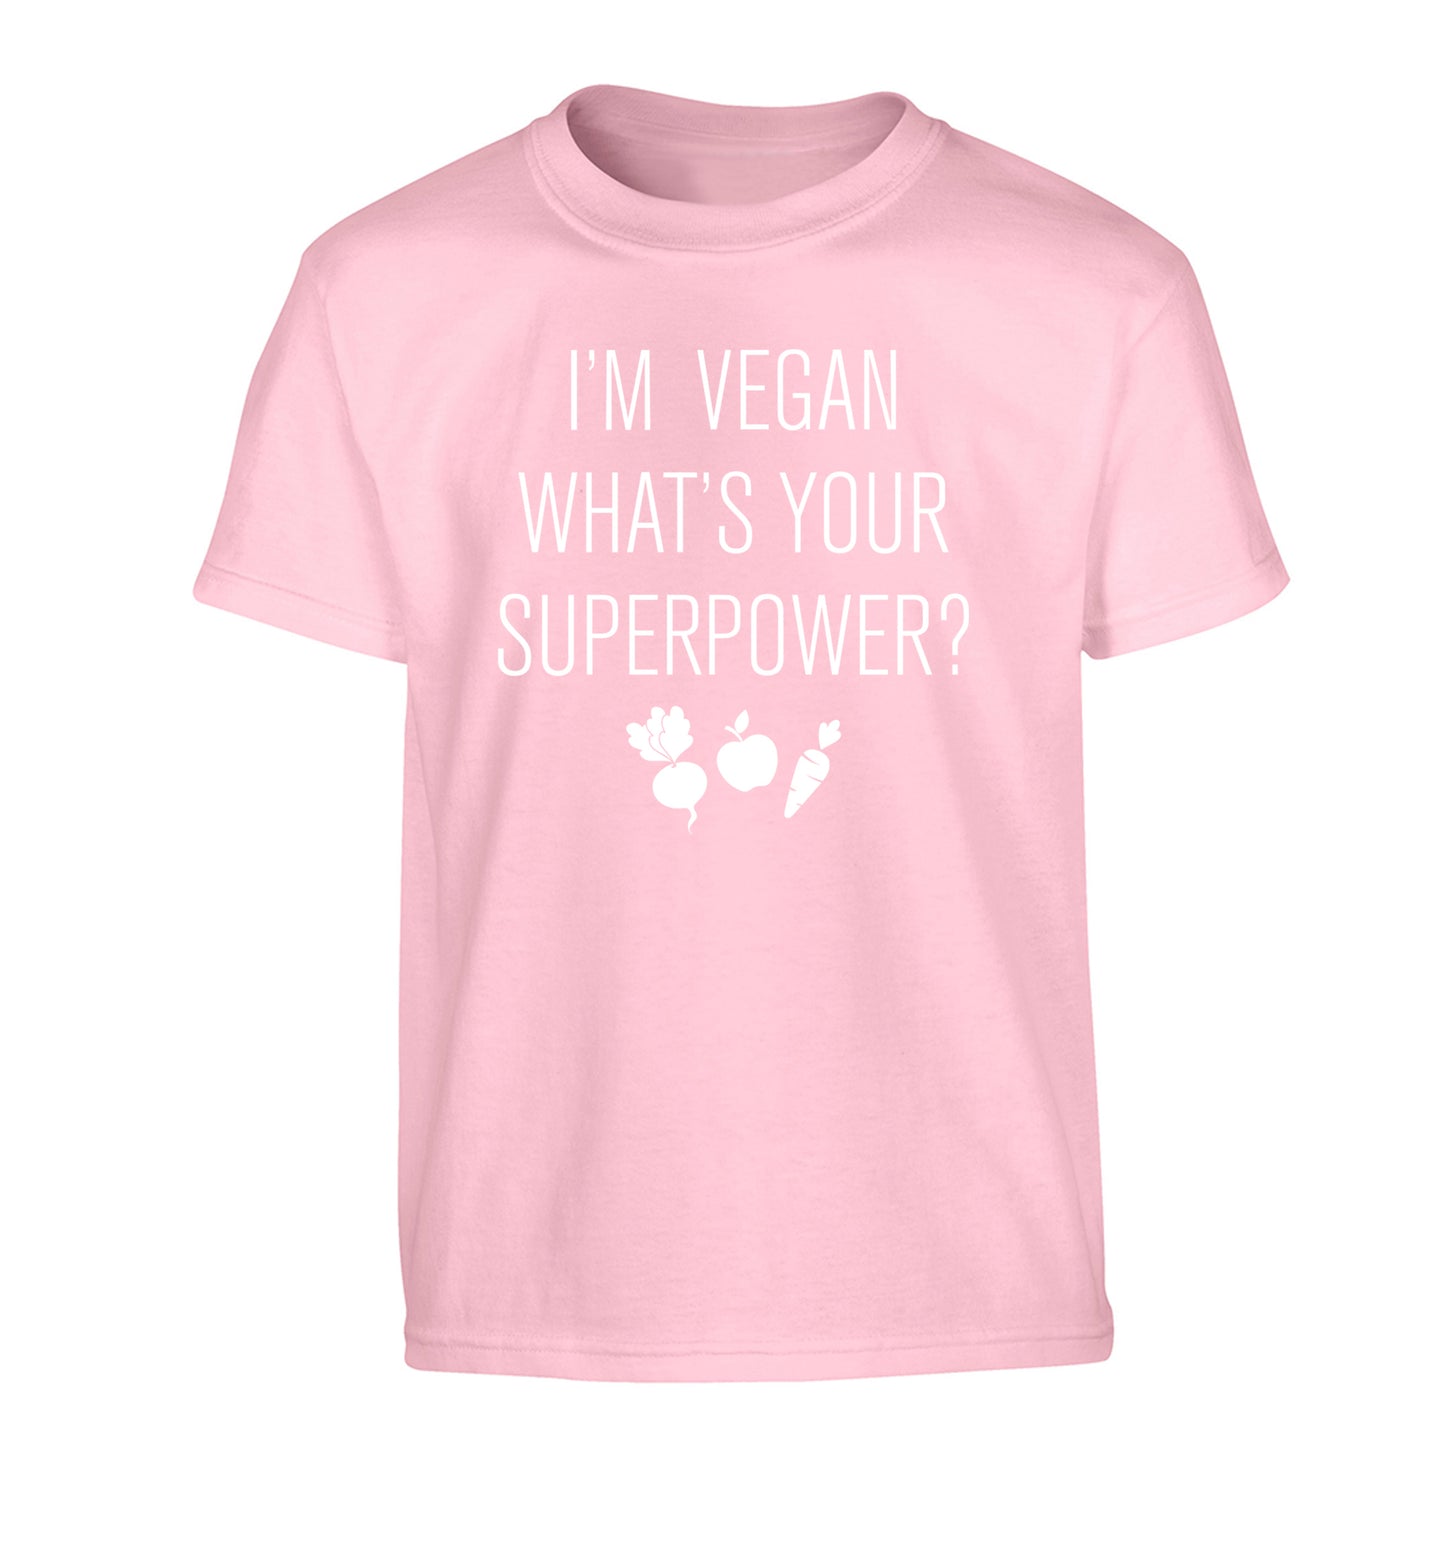 I'm Vegan What's Your Superpower? Children's light pink Tshirt 12-13 Years